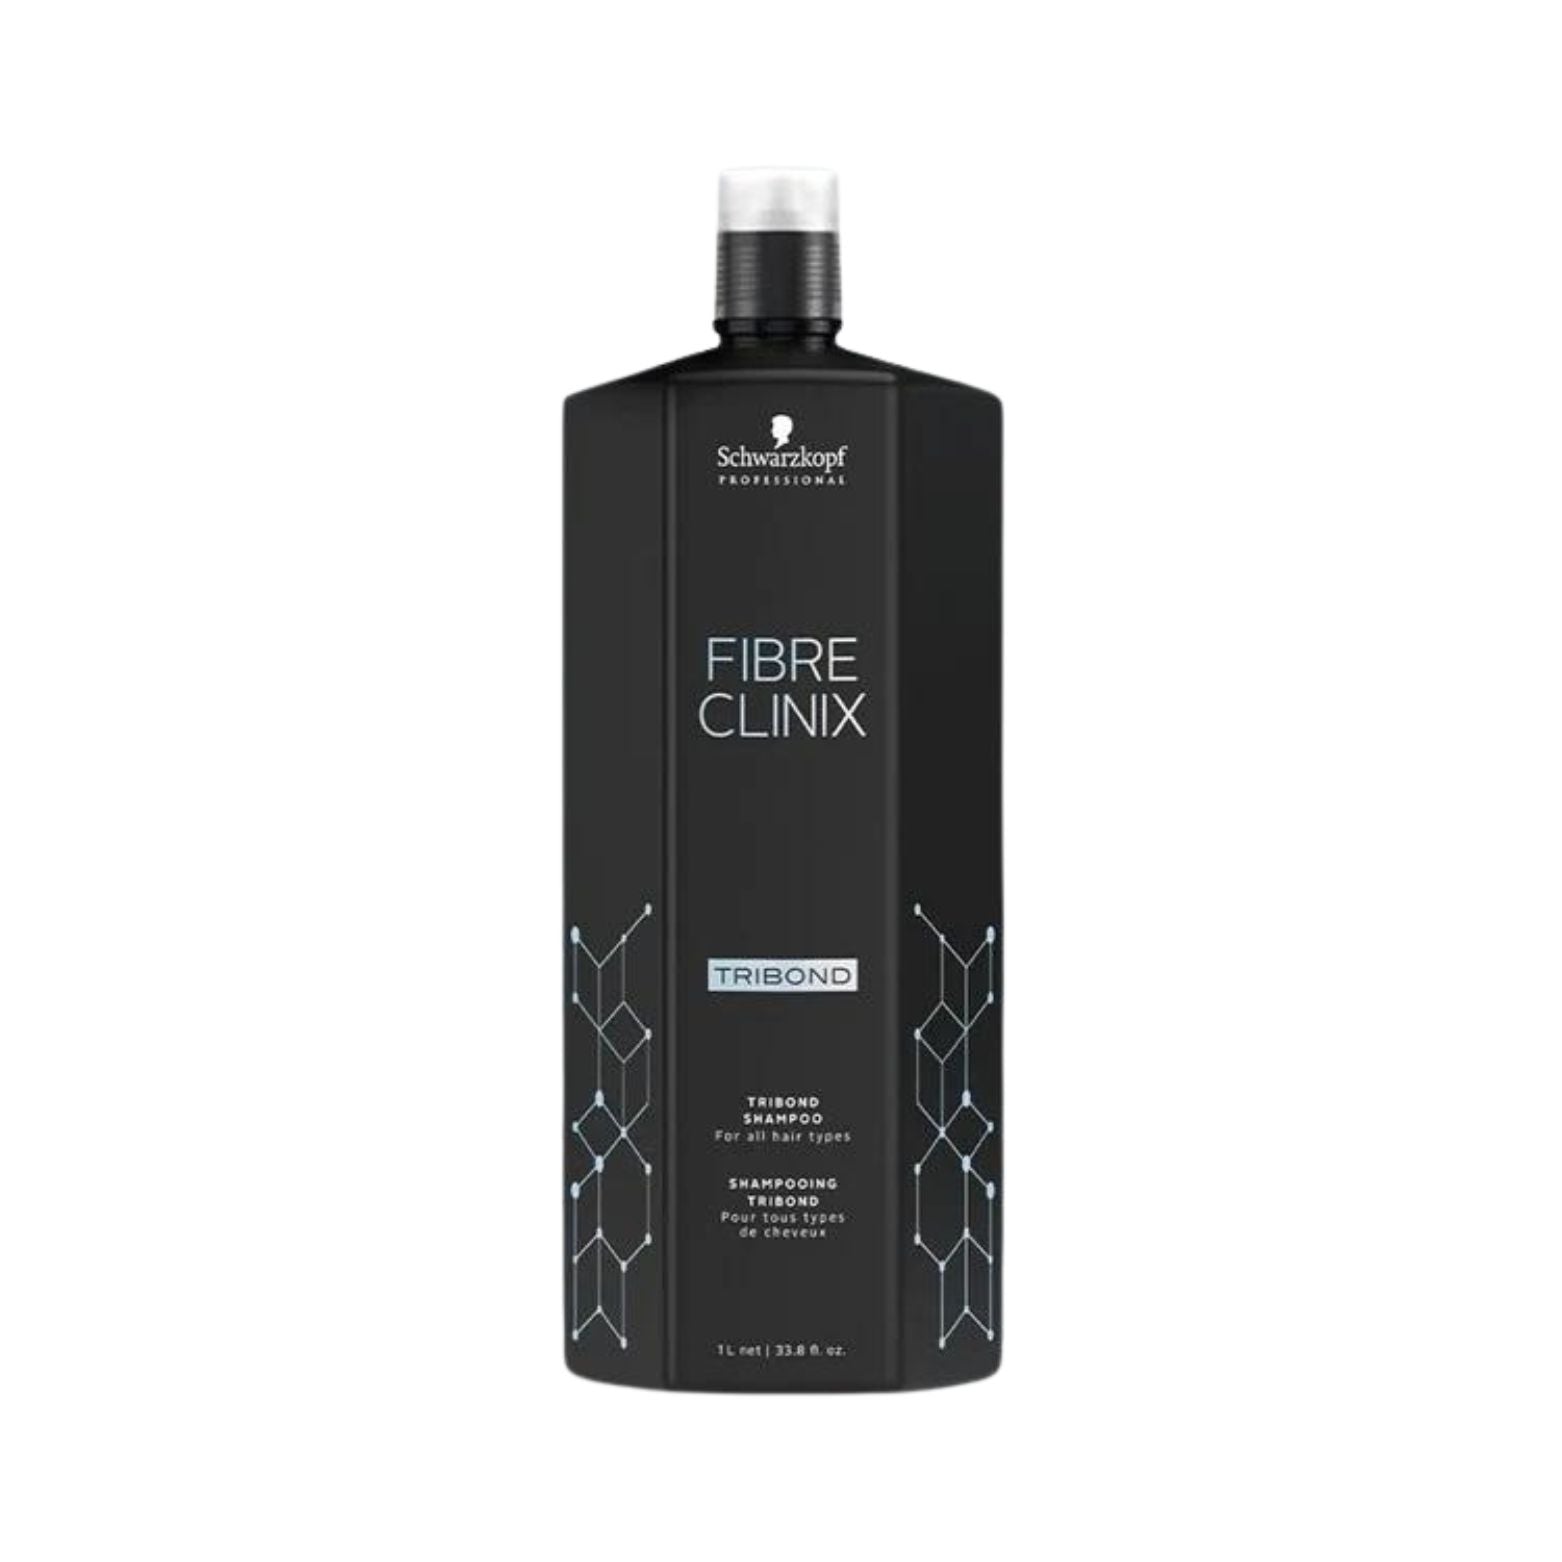 Fibre Clinix Tribond Shampoo 1000ml - Kuituhiukset.fi